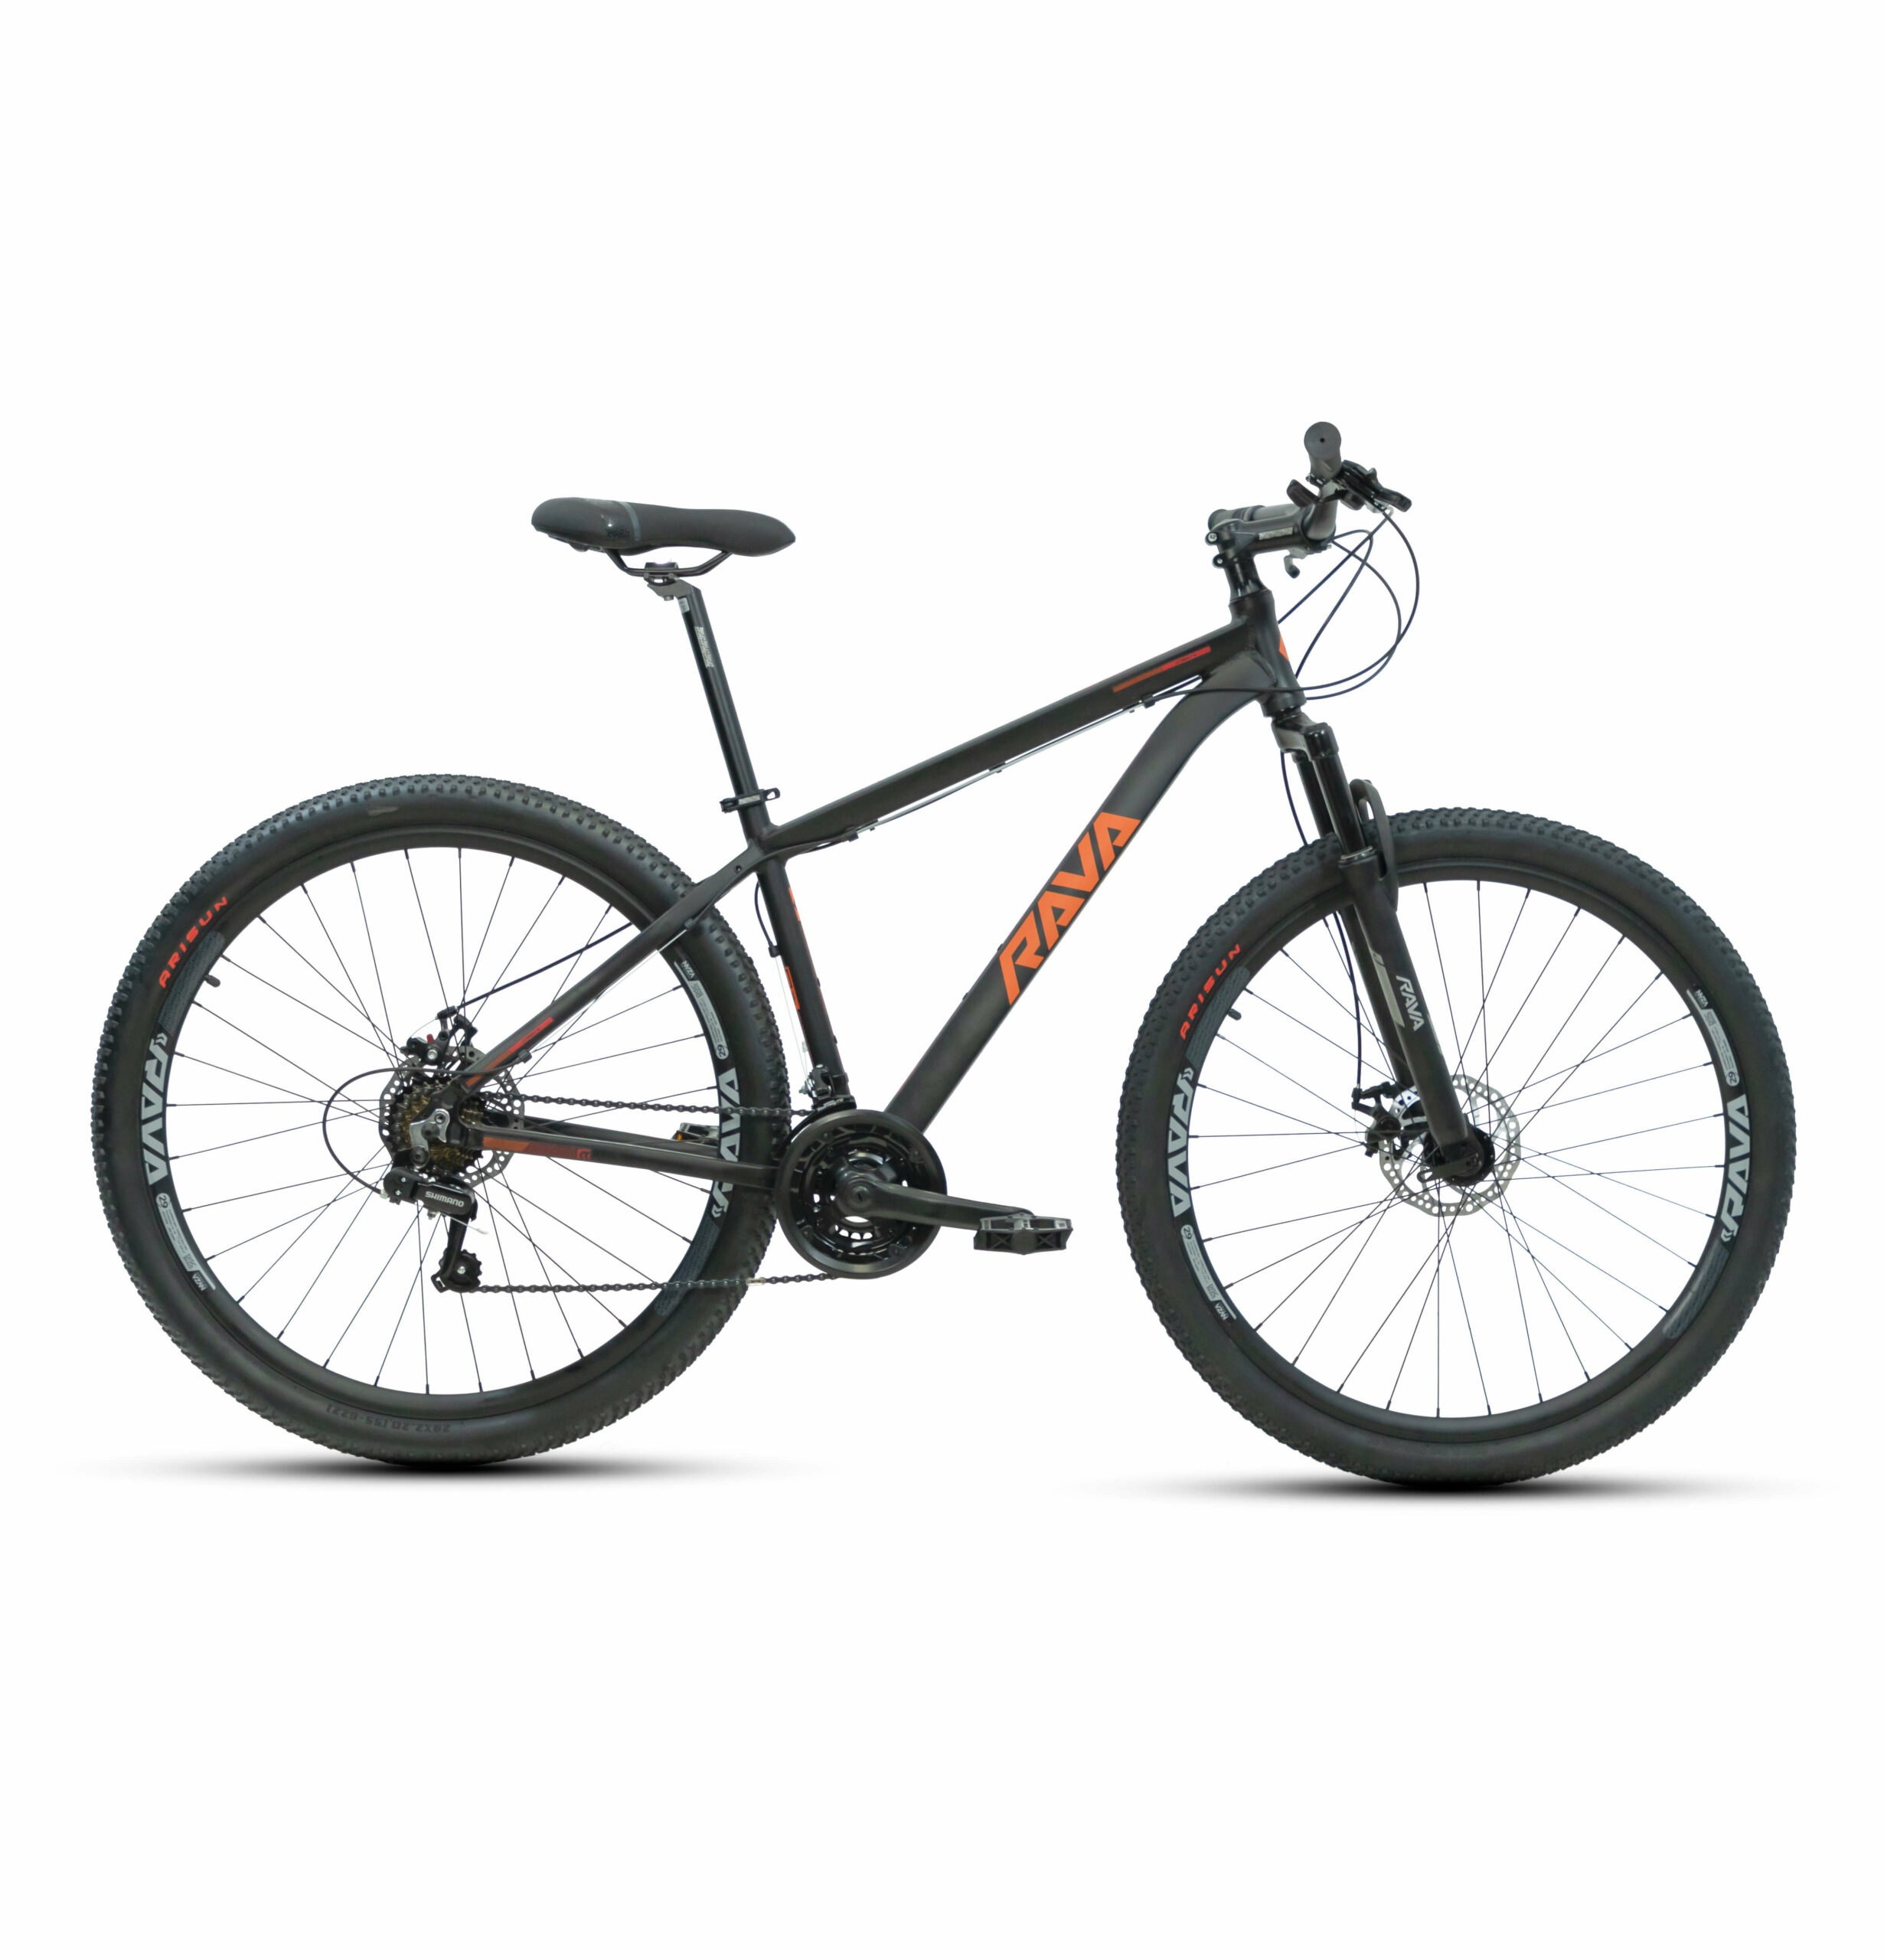 Bicicleta Pressure 29 Rava | 2021 | Edição 21v. Mecânico - Preto/Vermelho/Laranja, 15.5"